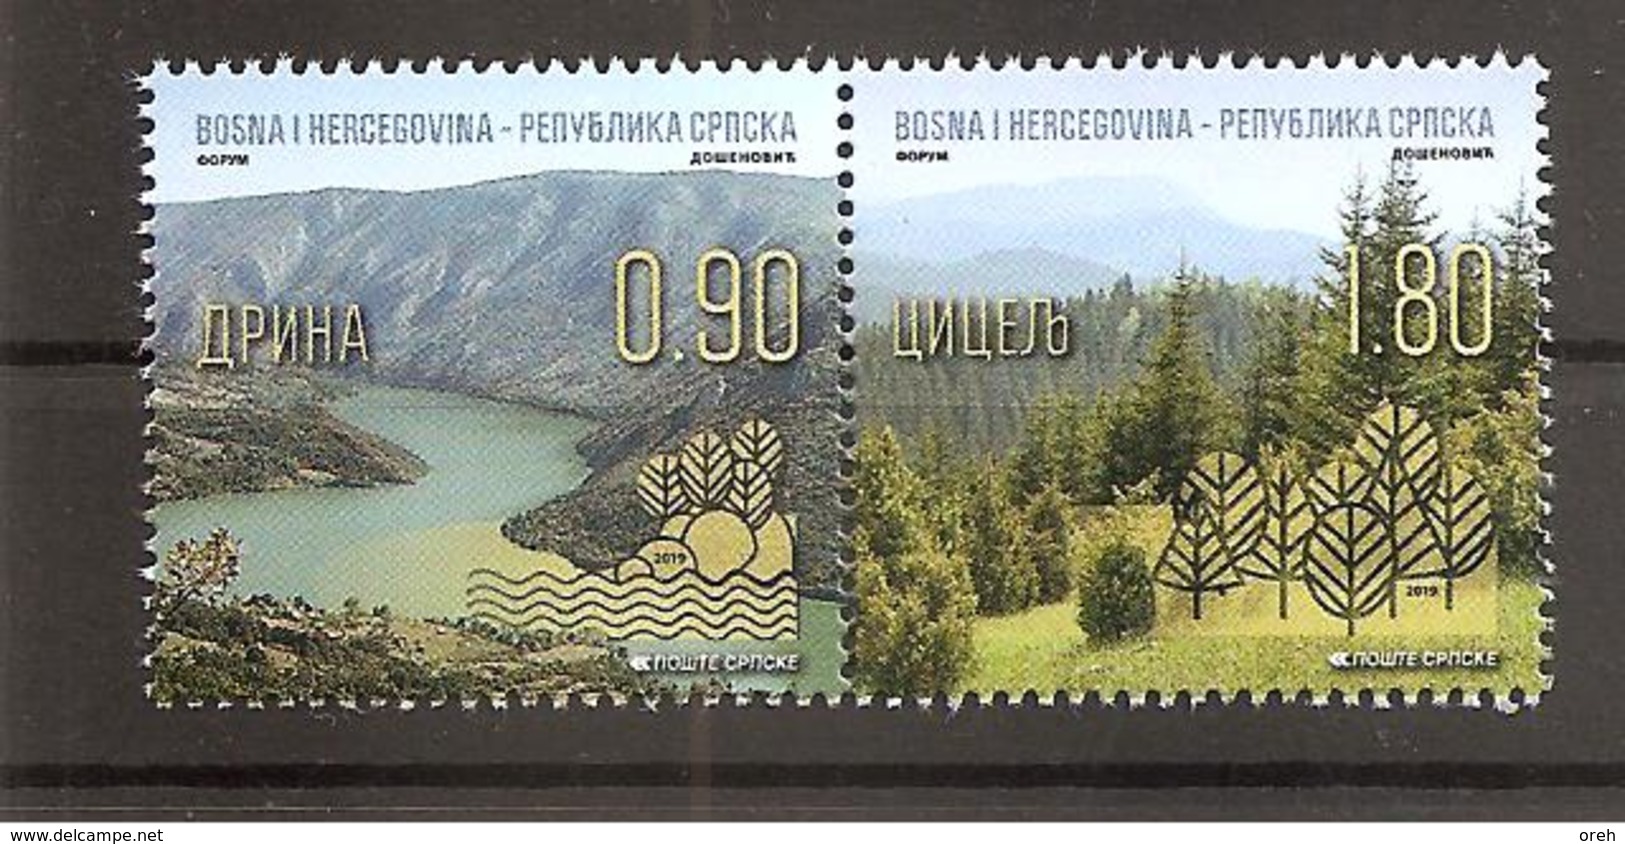 BOSNIA AND HERZEGOVINA 2019,SERBIA BOSNIA,NATUR PROTECTION,DRINA RIVER,MOUNTAIN,MNH - Umweltschutz Und Klima